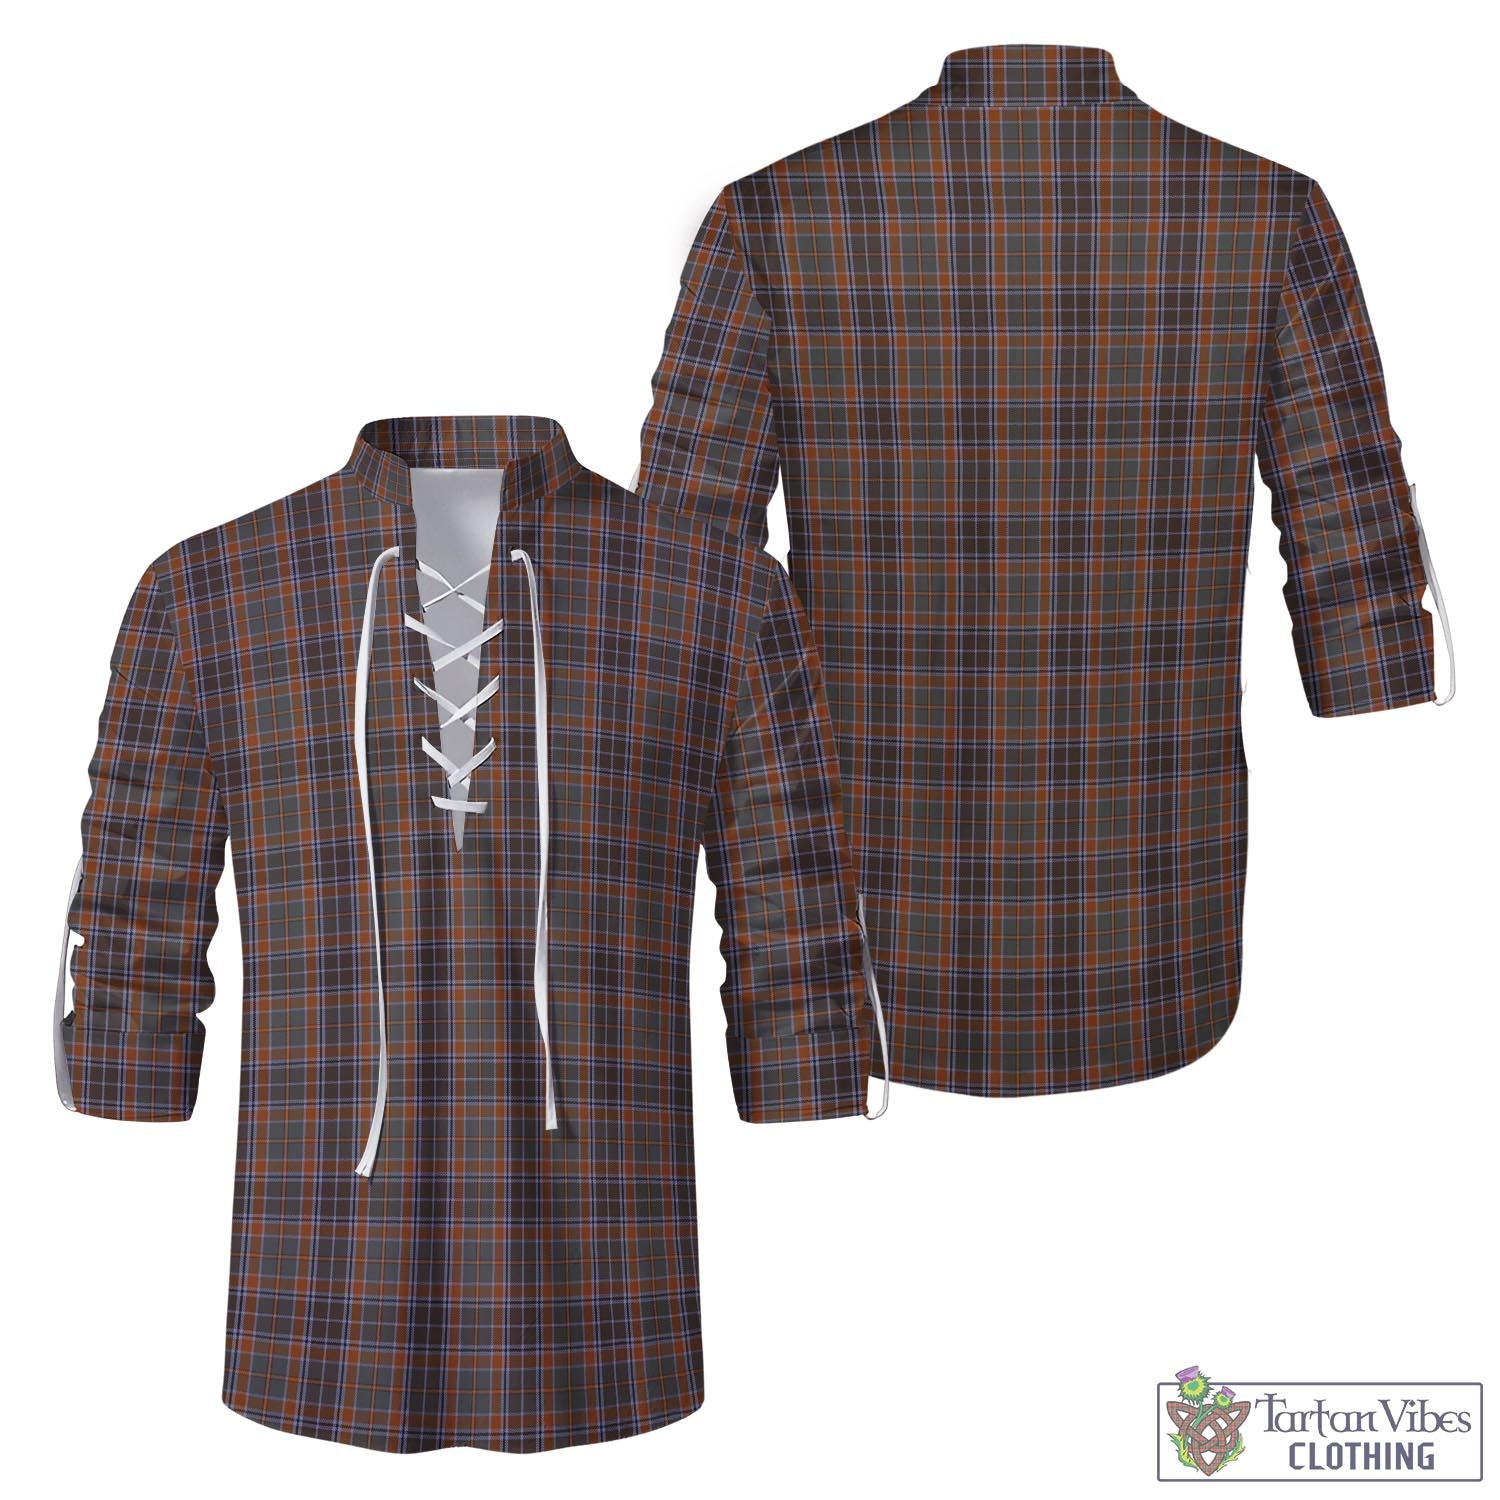 Tartan Vibes Clothing Leitrim County Ireland Tartan Men's Scottish Traditional Jacobite Ghillie Kilt Shirt